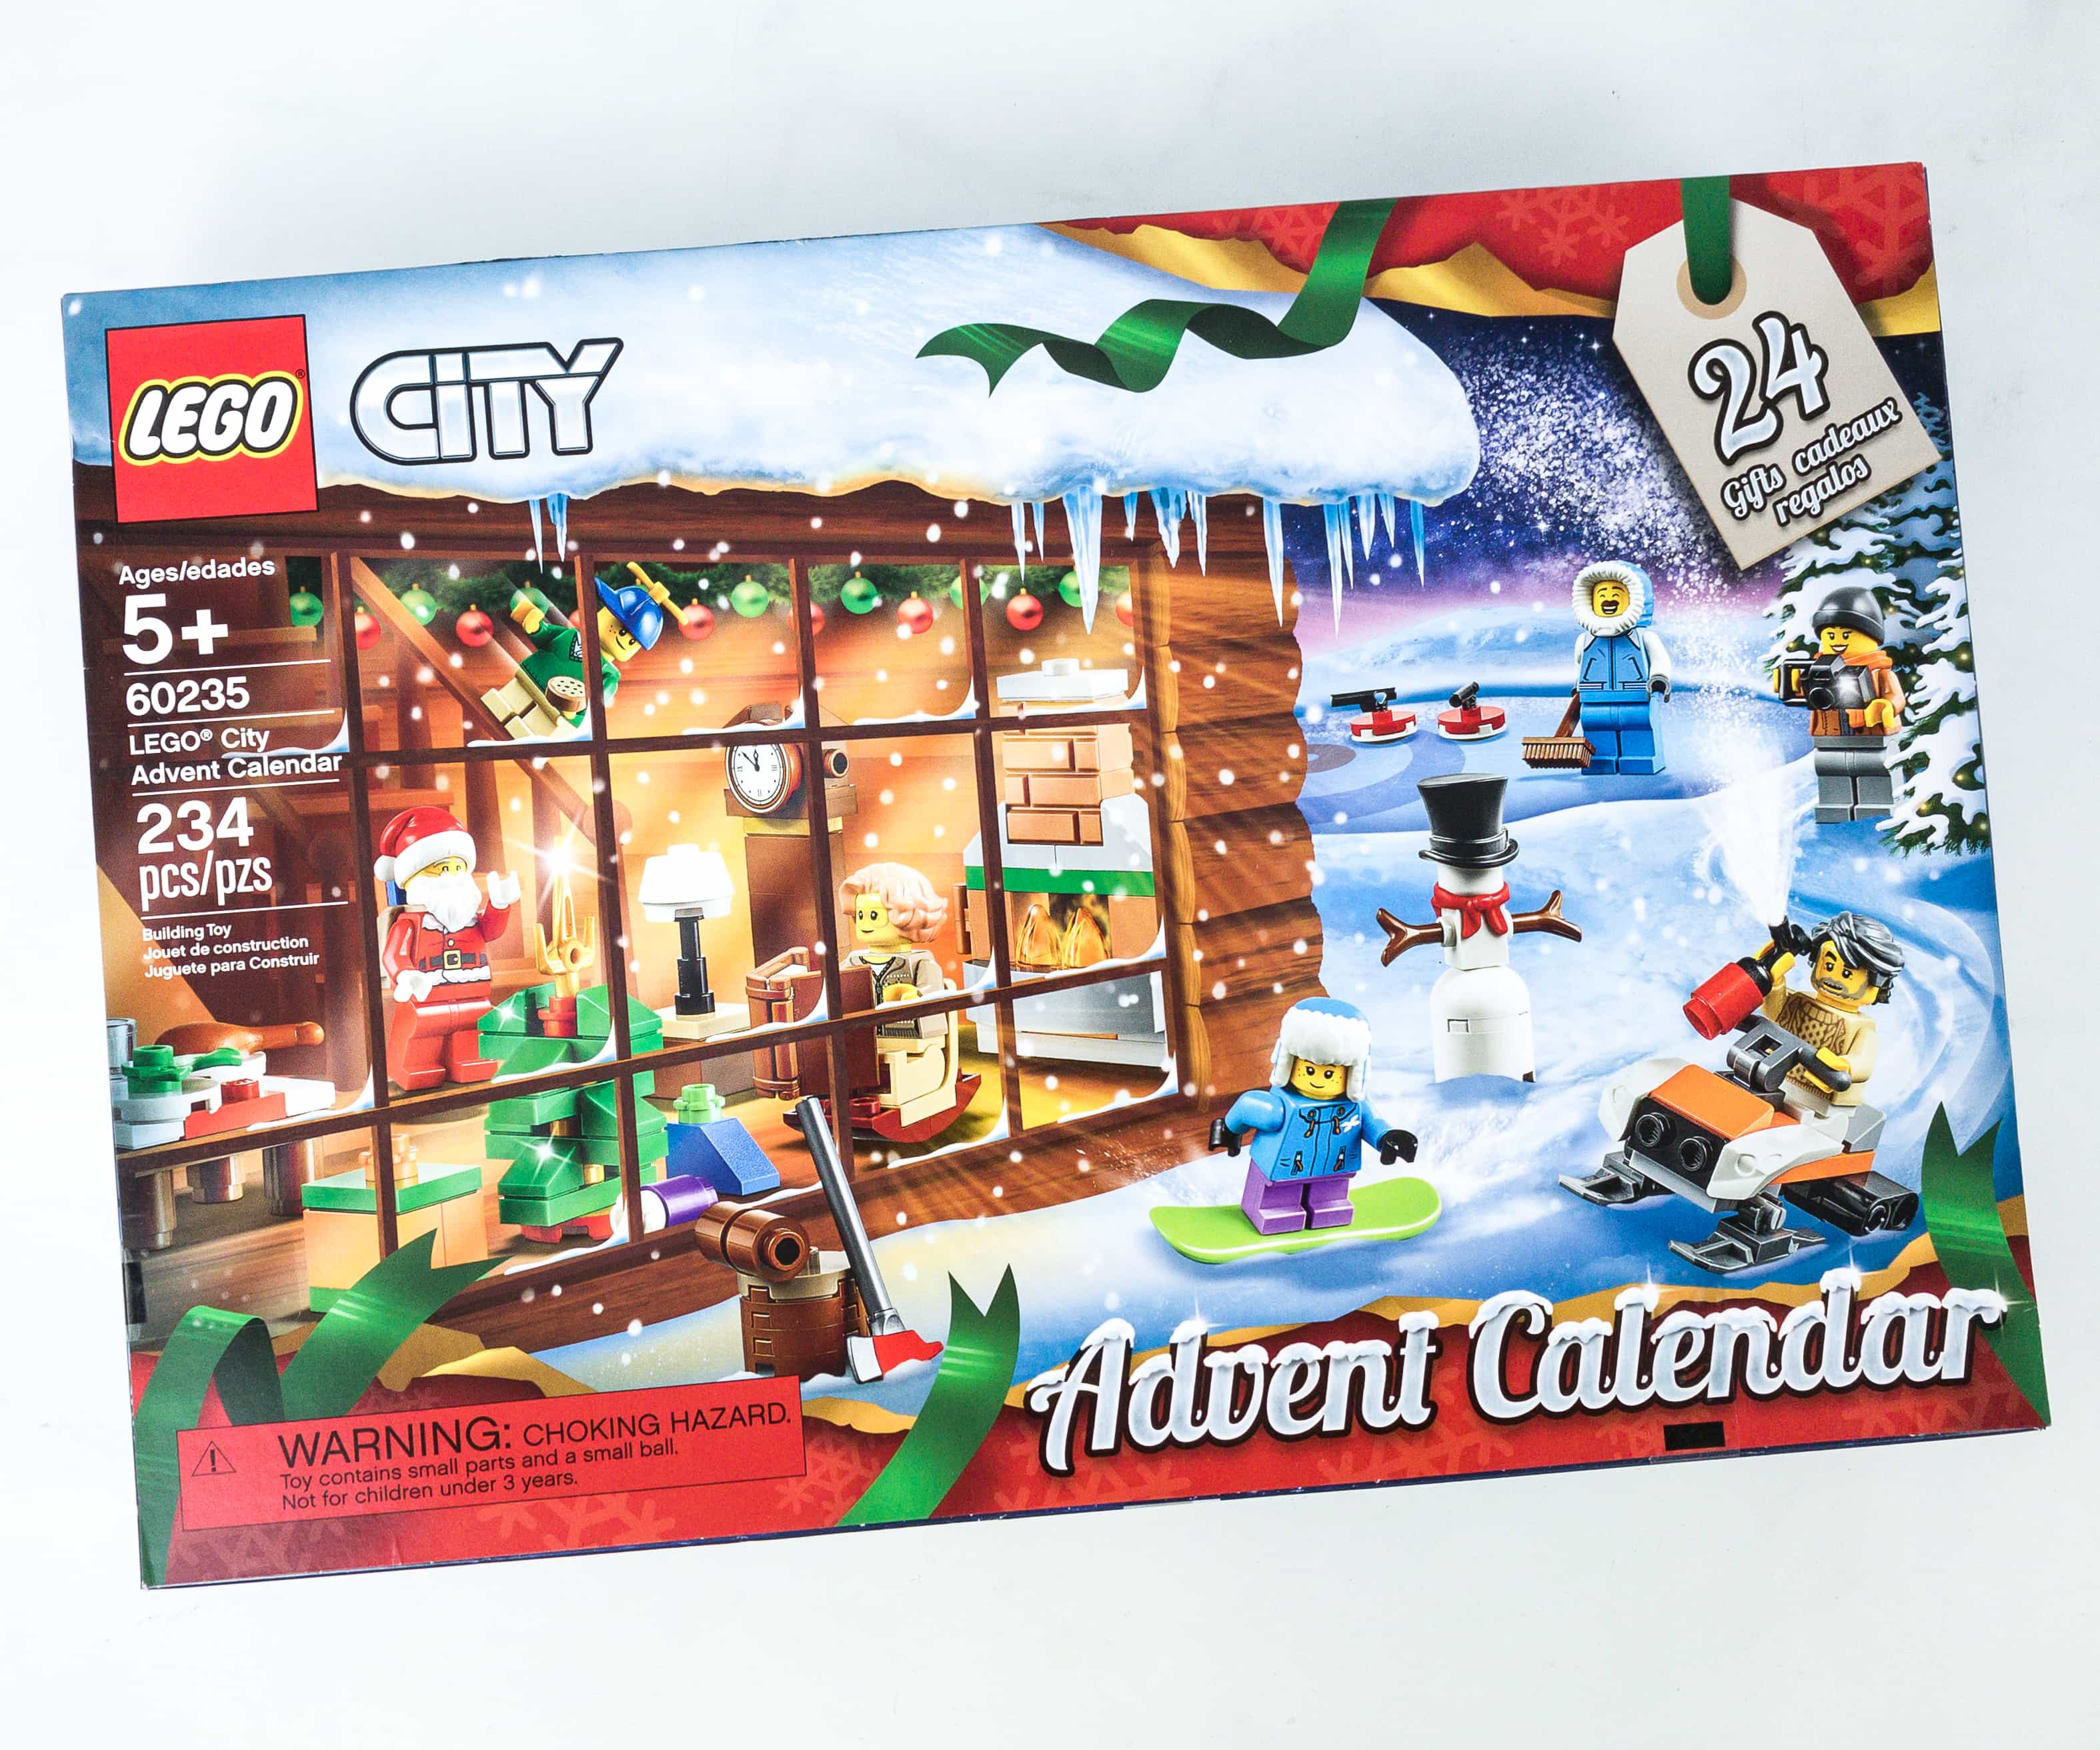 mangfoldighed diskriminerende Bærecirkel Lego City Advent Calendar 2019 Mini Review - Hello Subscription